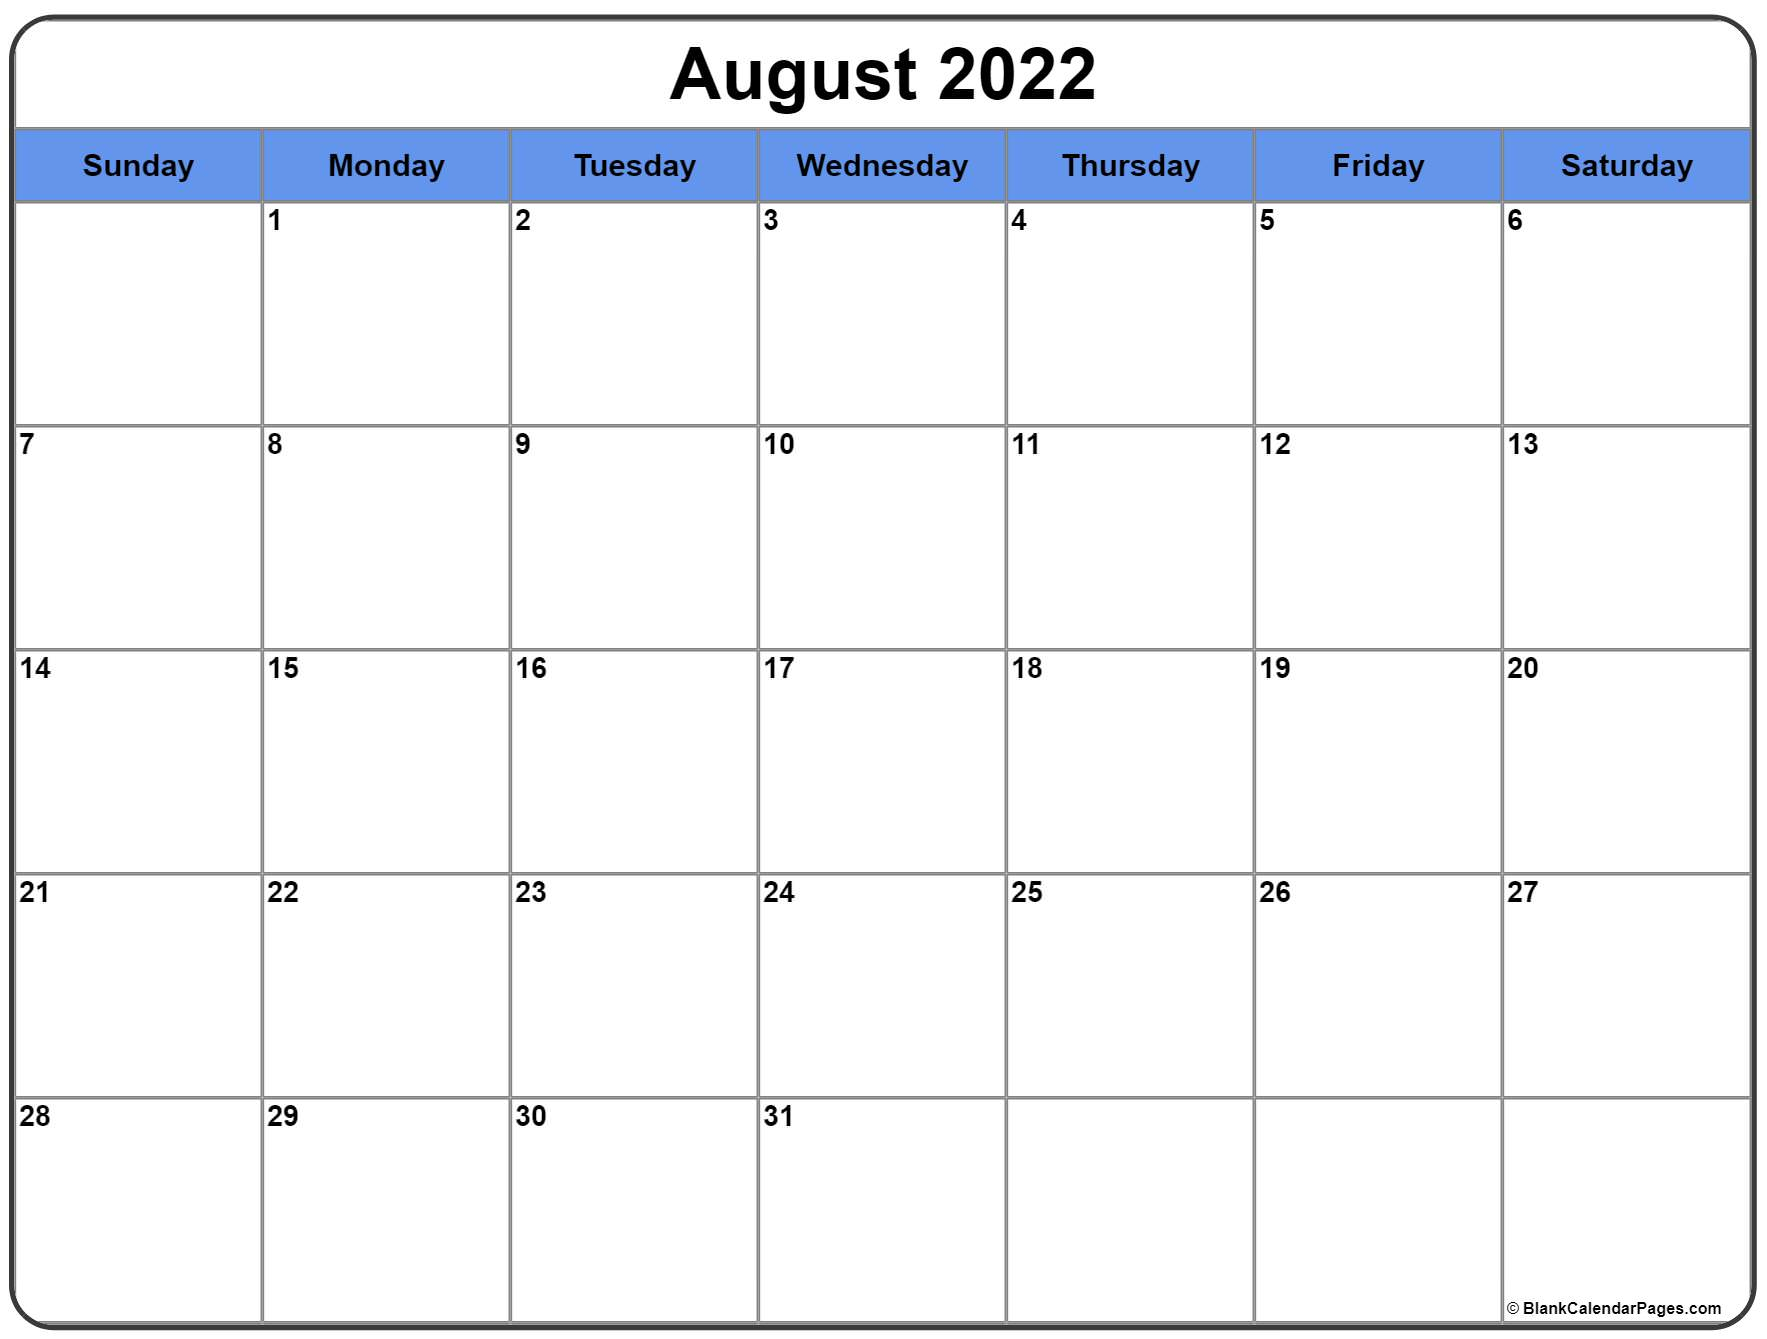 August 2022 Calendar | Free Printable Monthly Calendars